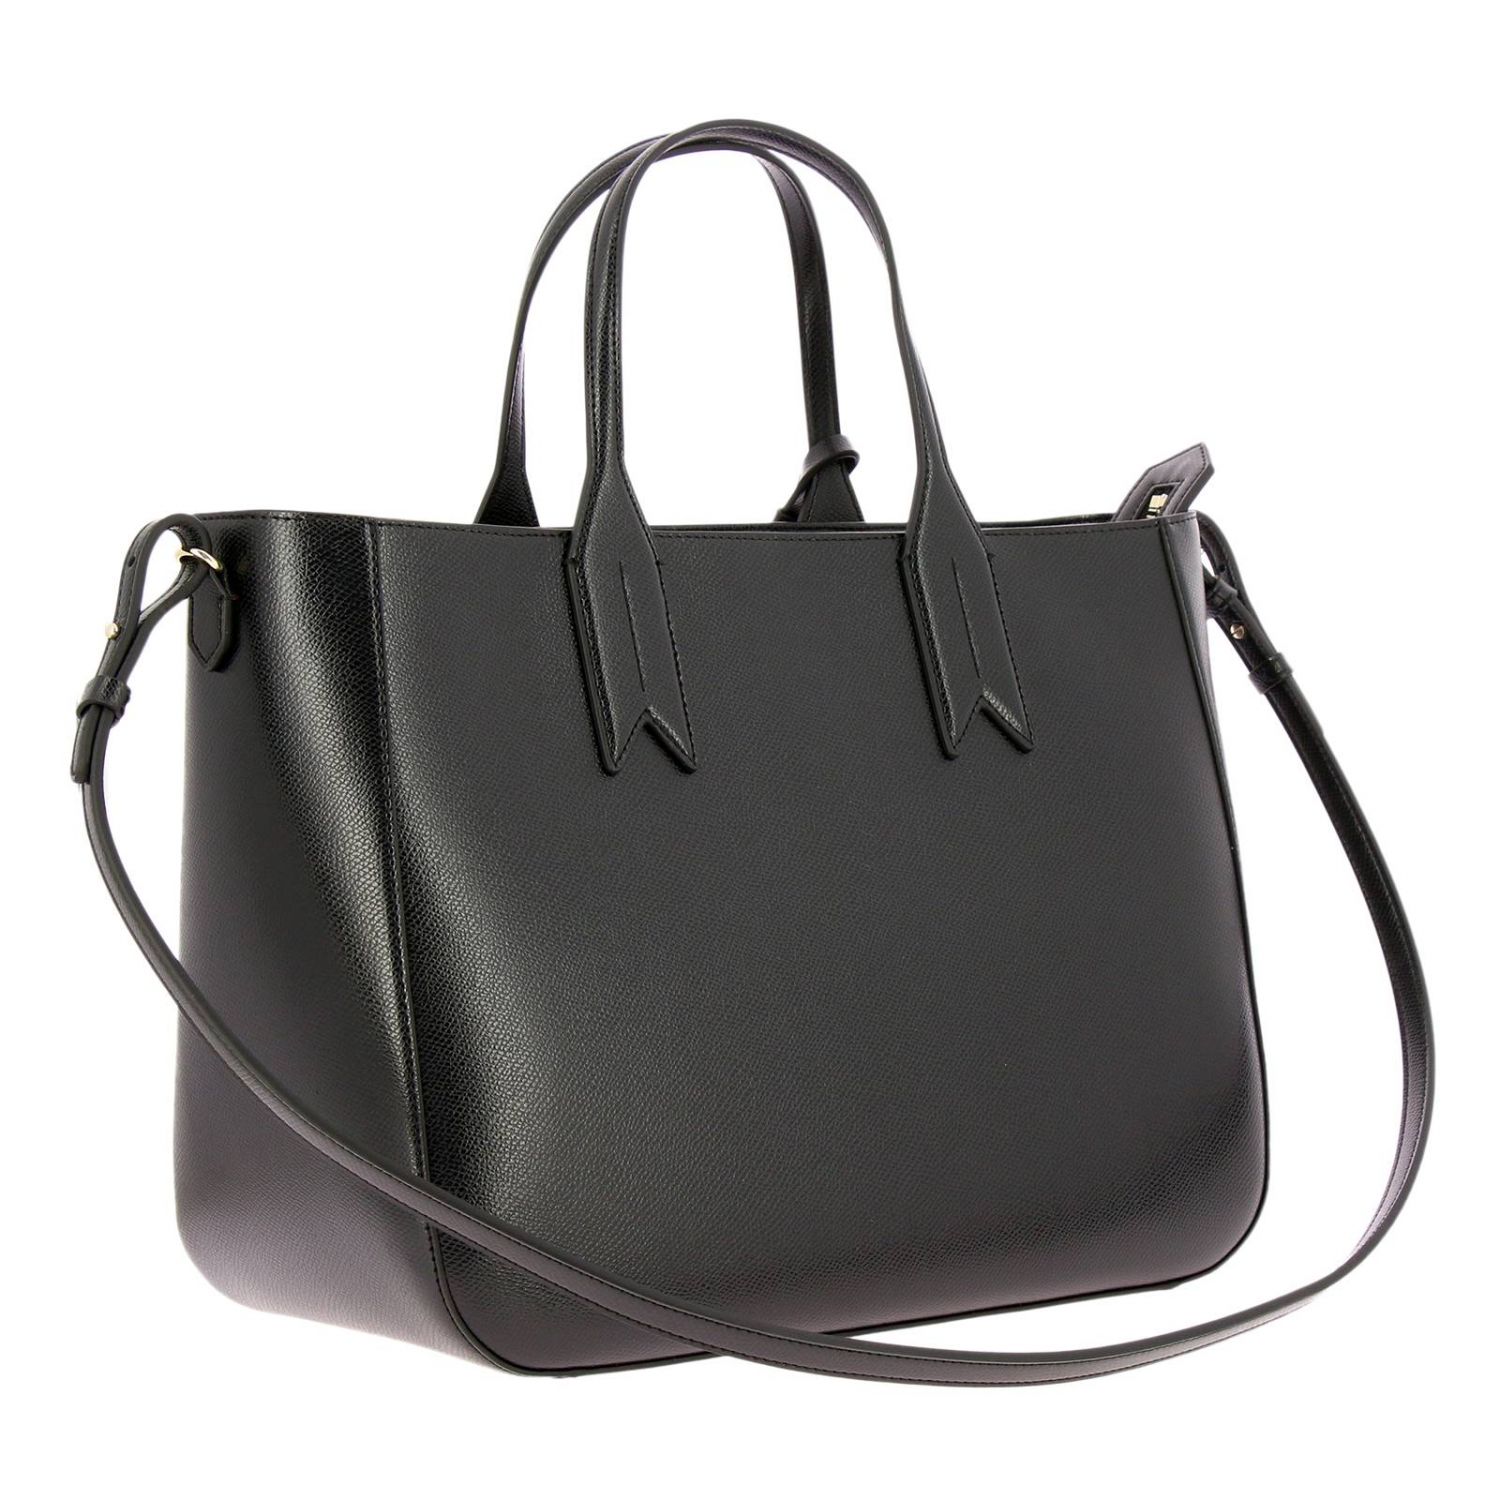 Emporio Armani Outlet: Shoulder bag women - Black | Handbag Emporio ...